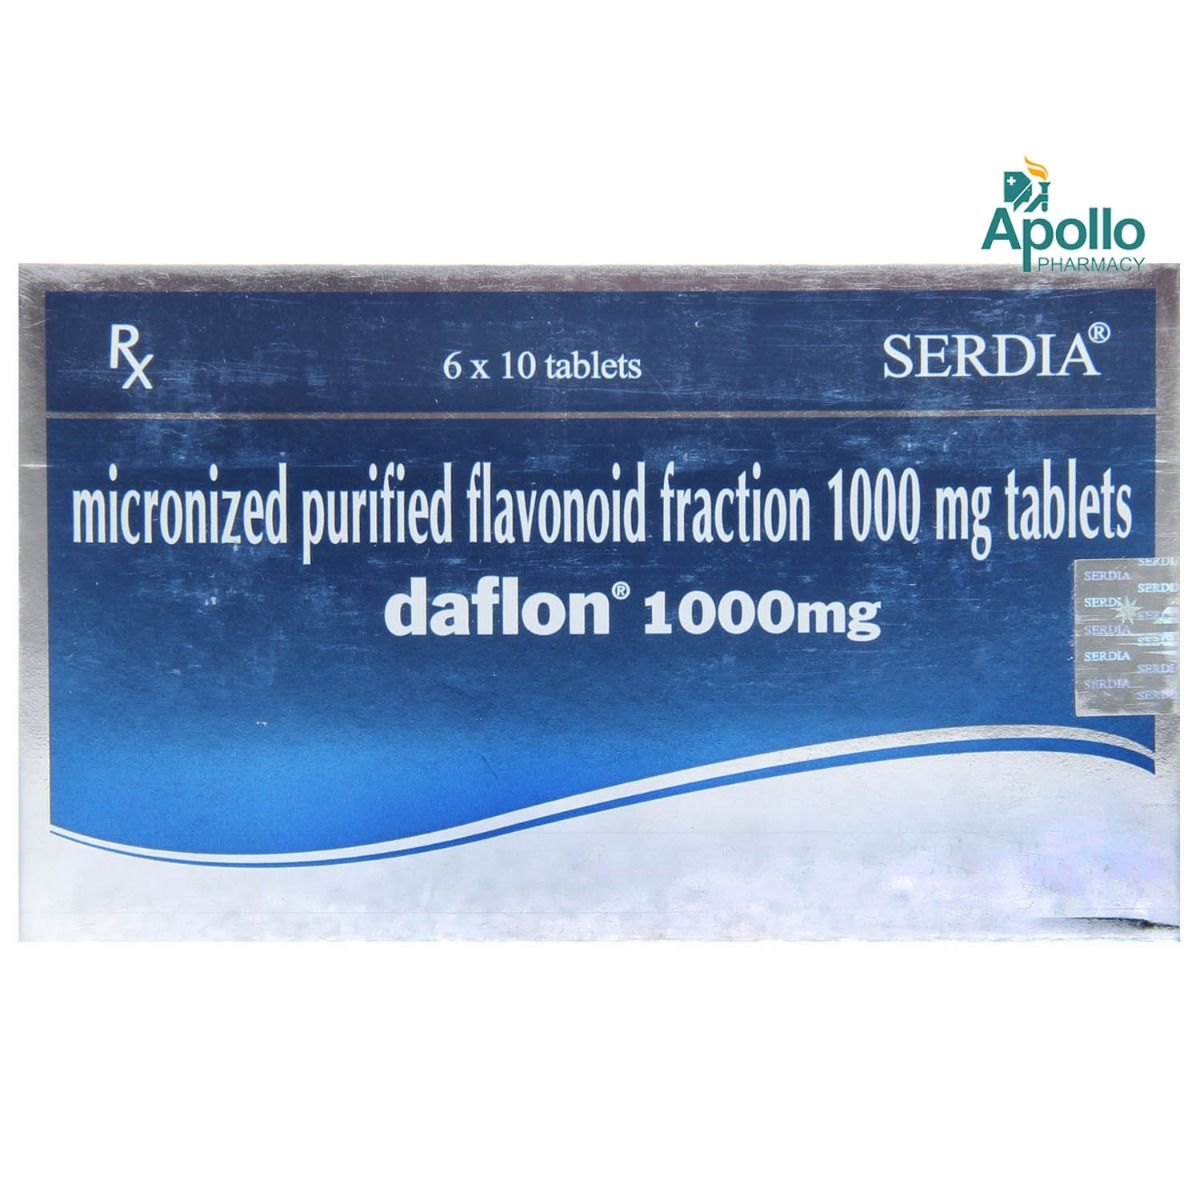 Daflon 1000mg 30 Comprimidos - Redebella